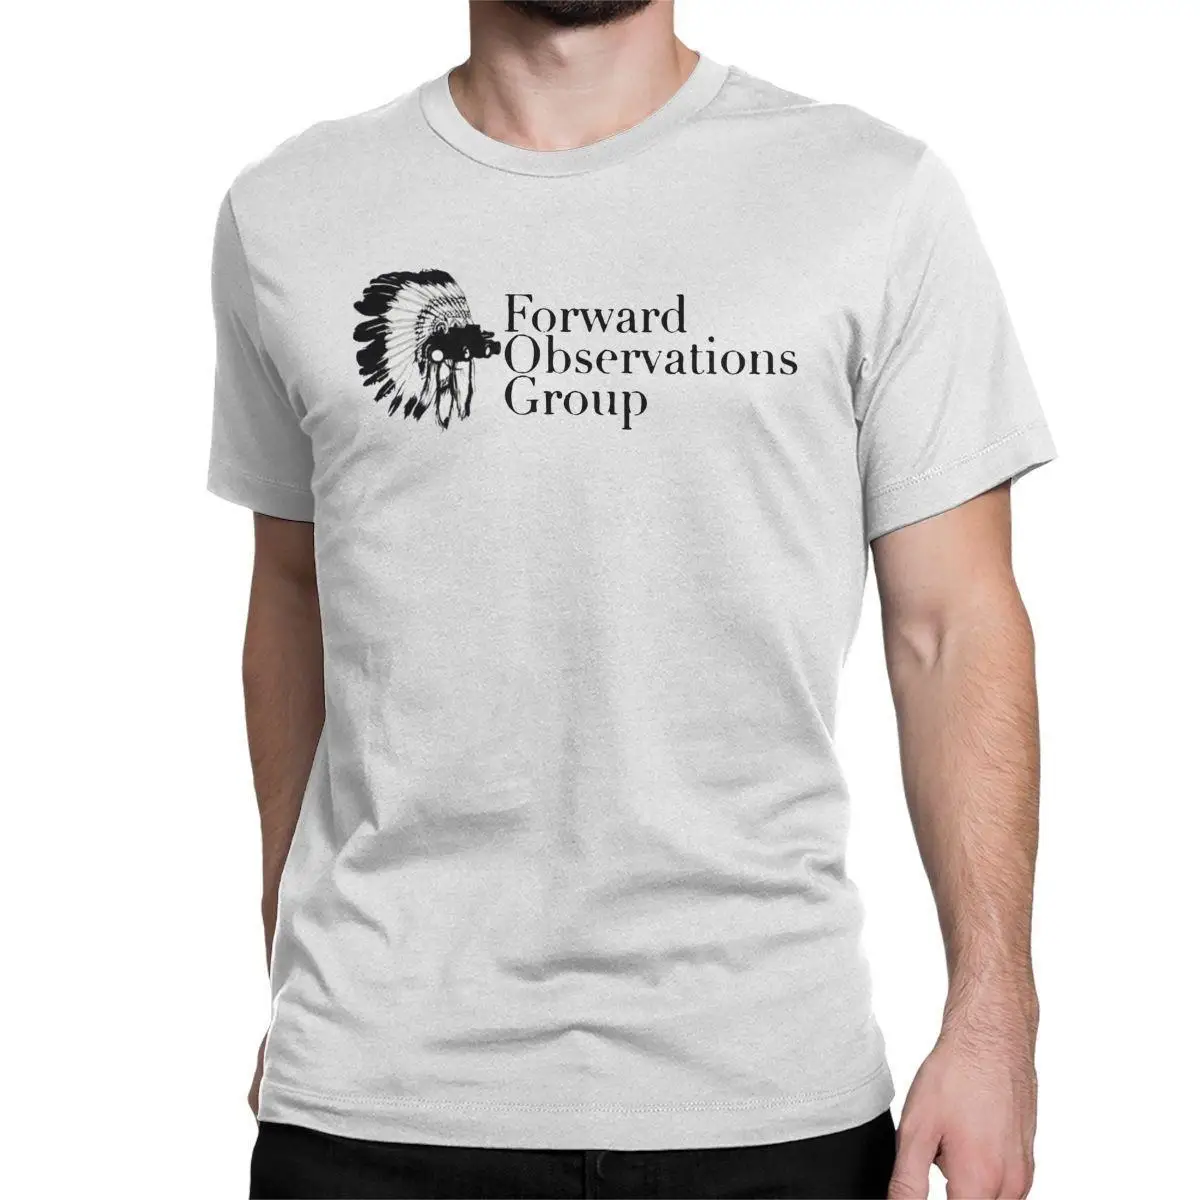 Forward Observations Group Gbrs Men's T Shirt Concepts Novelty Tee Shirt Short Sleeve Round Collar T-Shirts Cotton Gift Idea